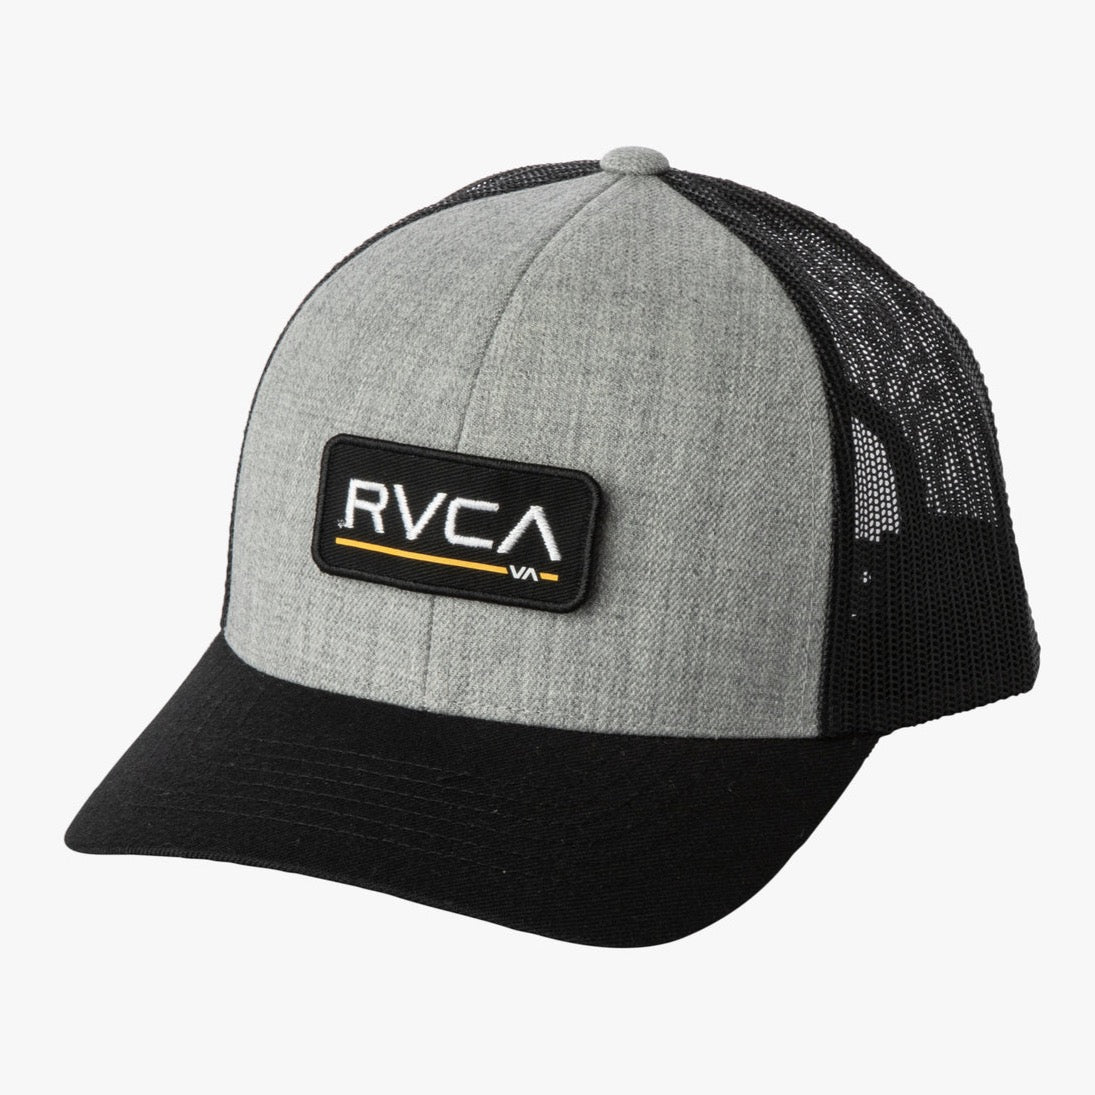 Hat - RVCA VA Ticket Trucker Hat